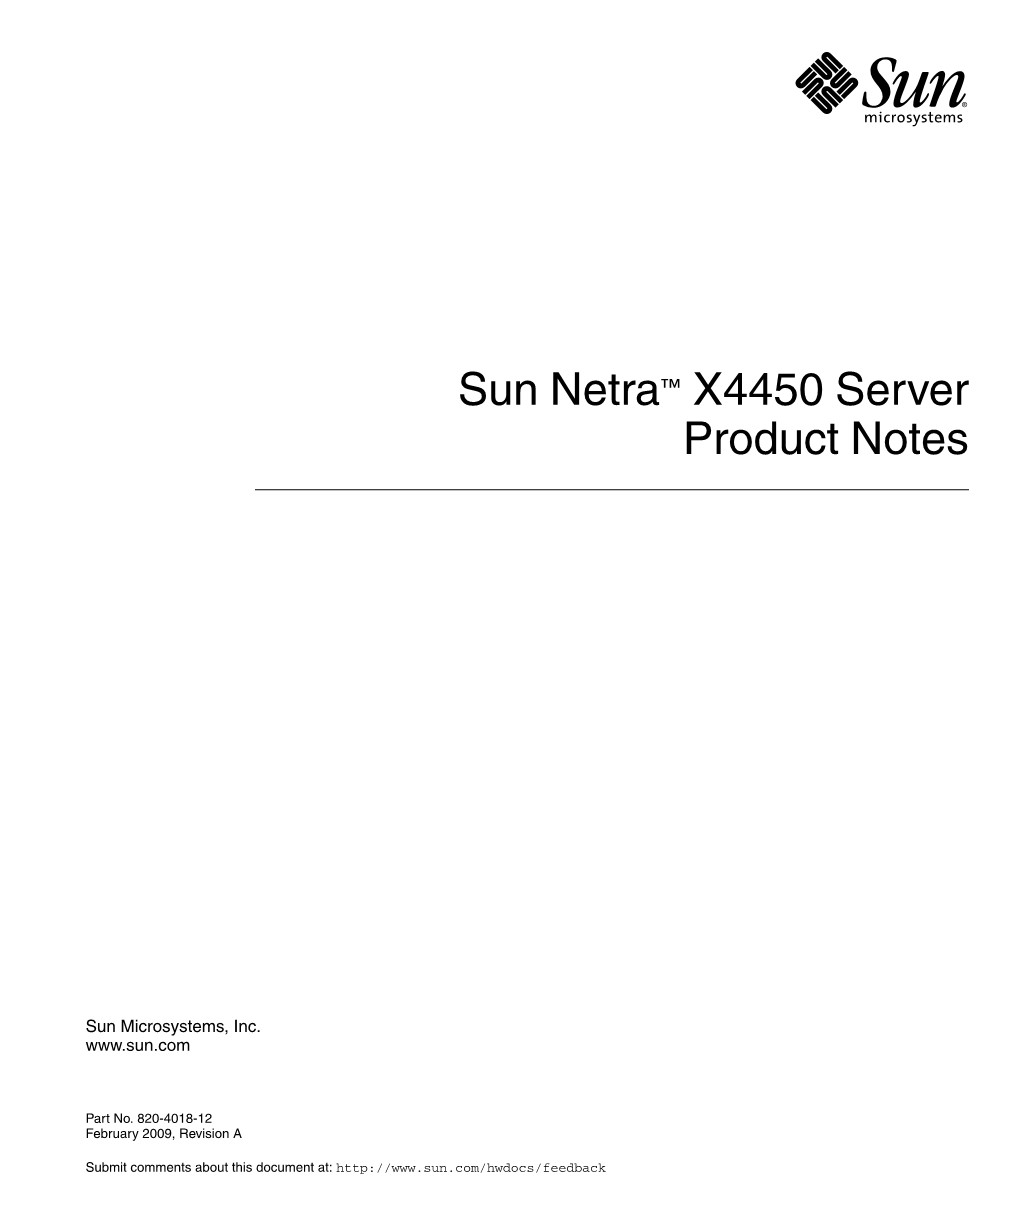 Sun Netra X4450 Server Product Notes